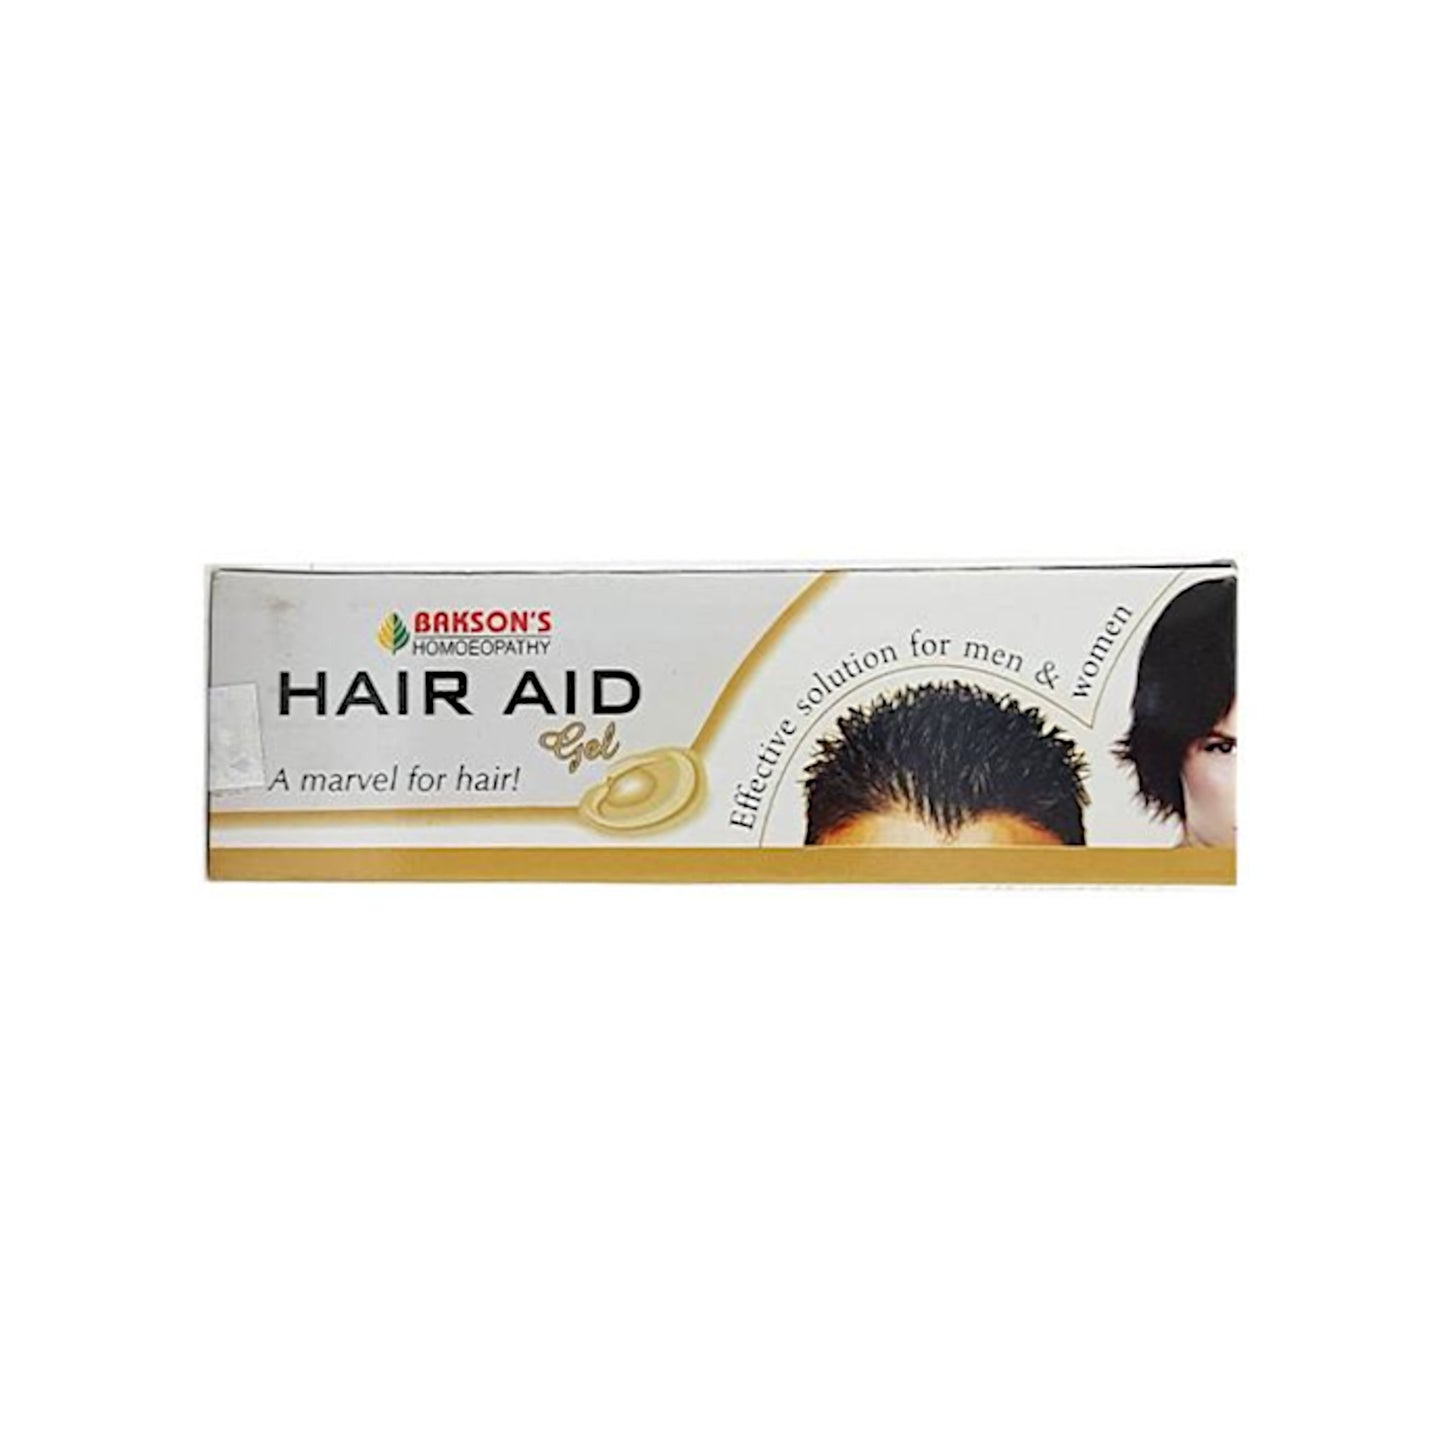 Image: Bakson's Hair Aid Gel 75 g: Bakson's Hair Aid Gel - Supports healthy hair and scalp, fights hair concerns, including dandruff.